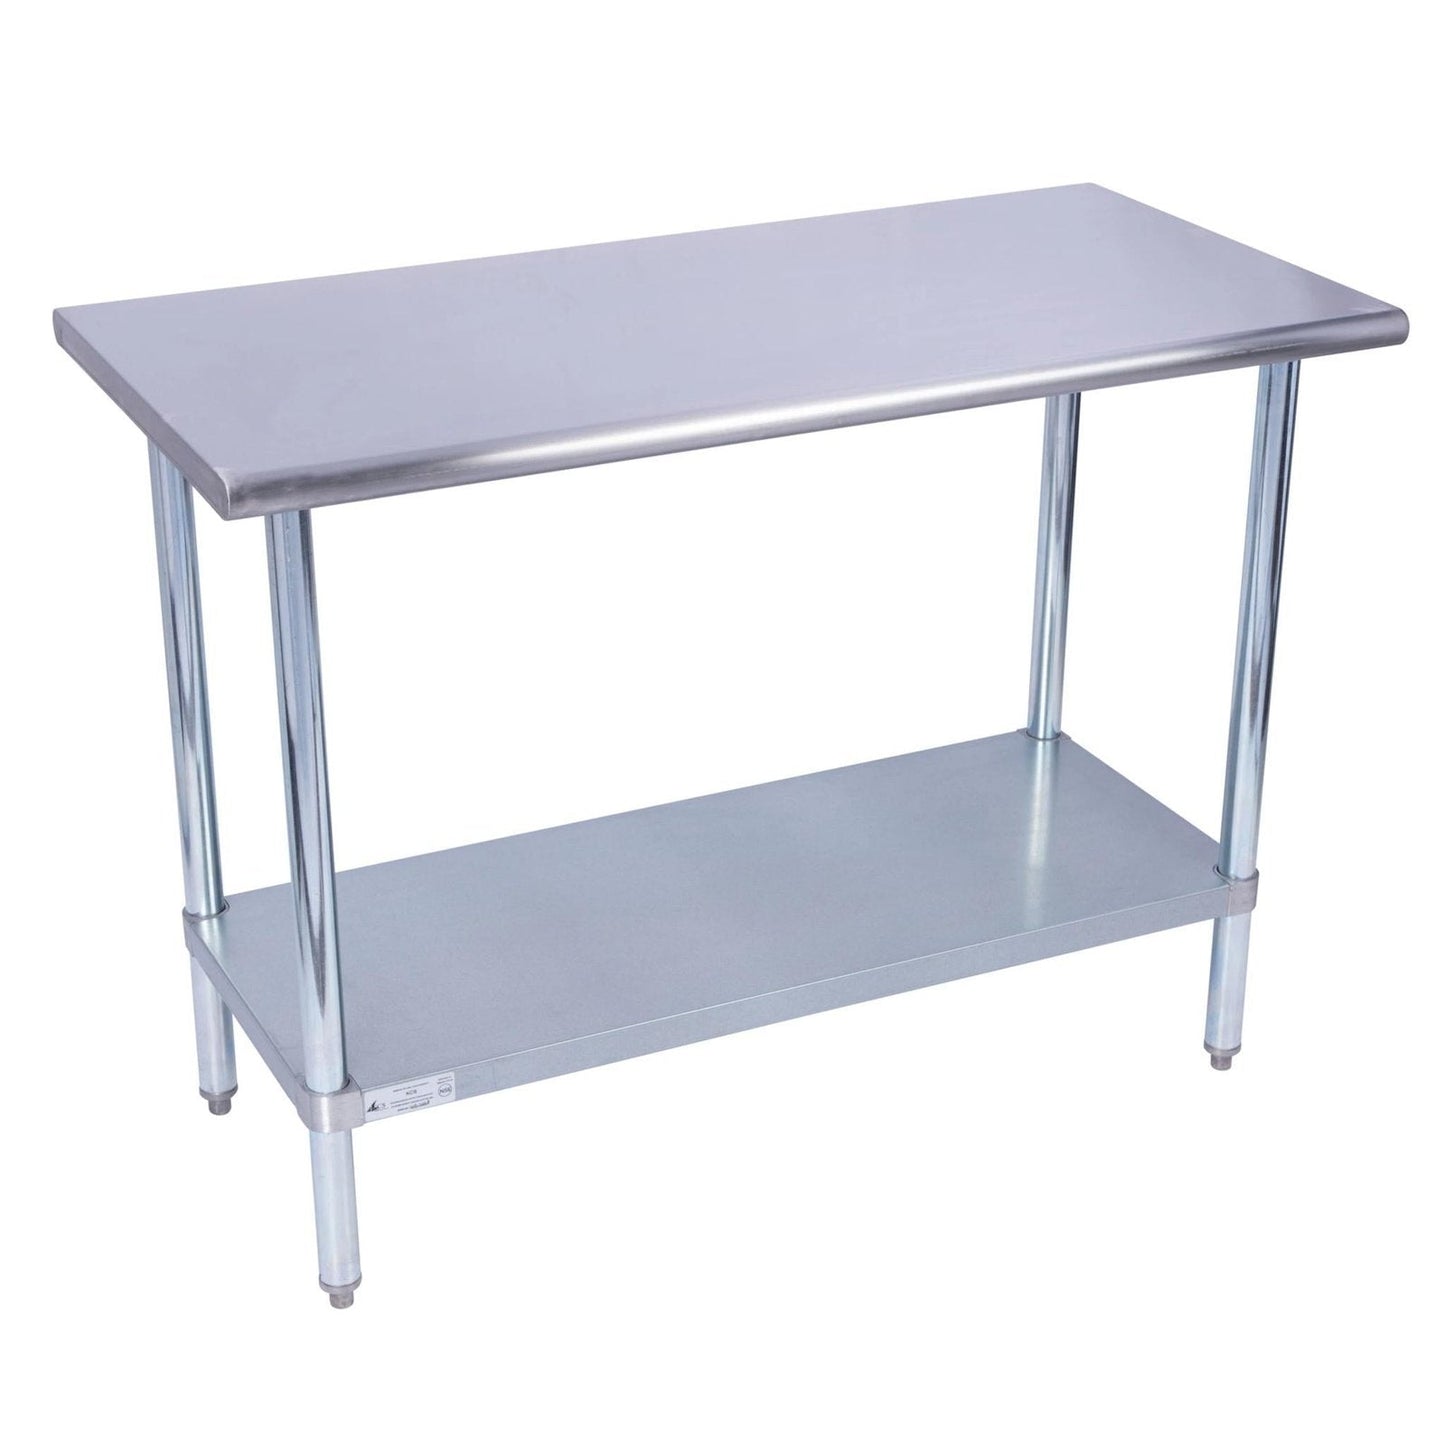 KCS 30″x 72″ Stainless Steel Work Tables with Galvanized Undershelf